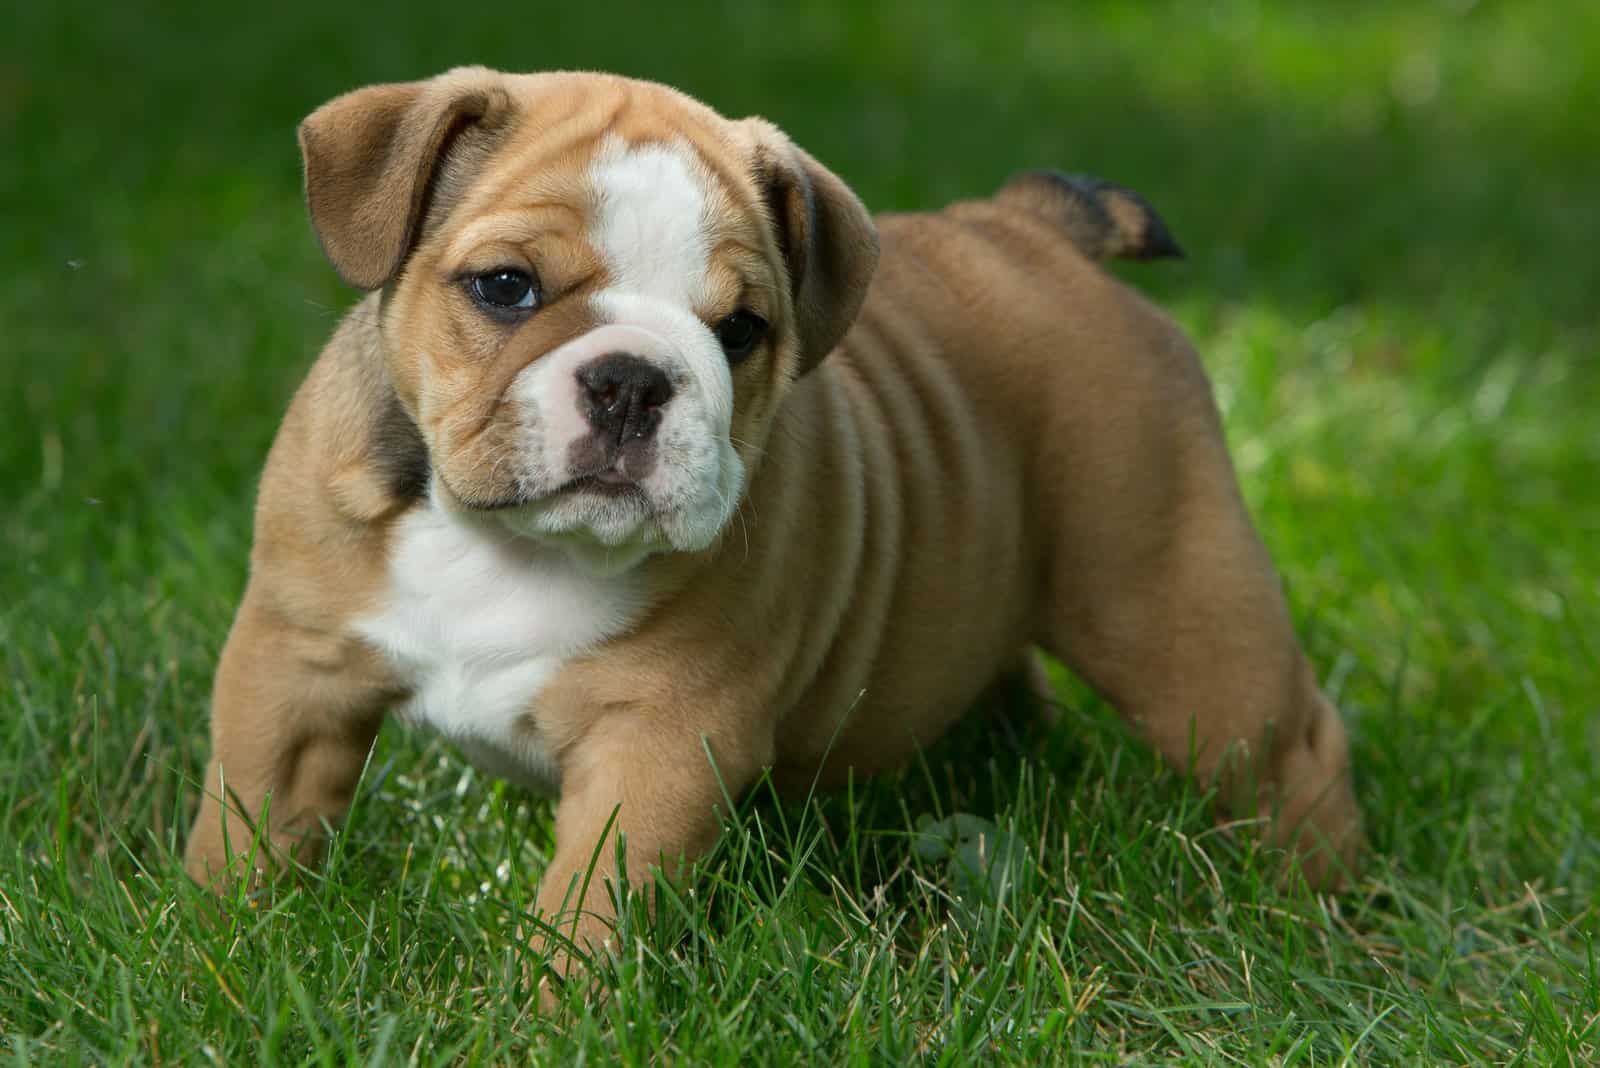 English Bulldog puppy standing on the grass